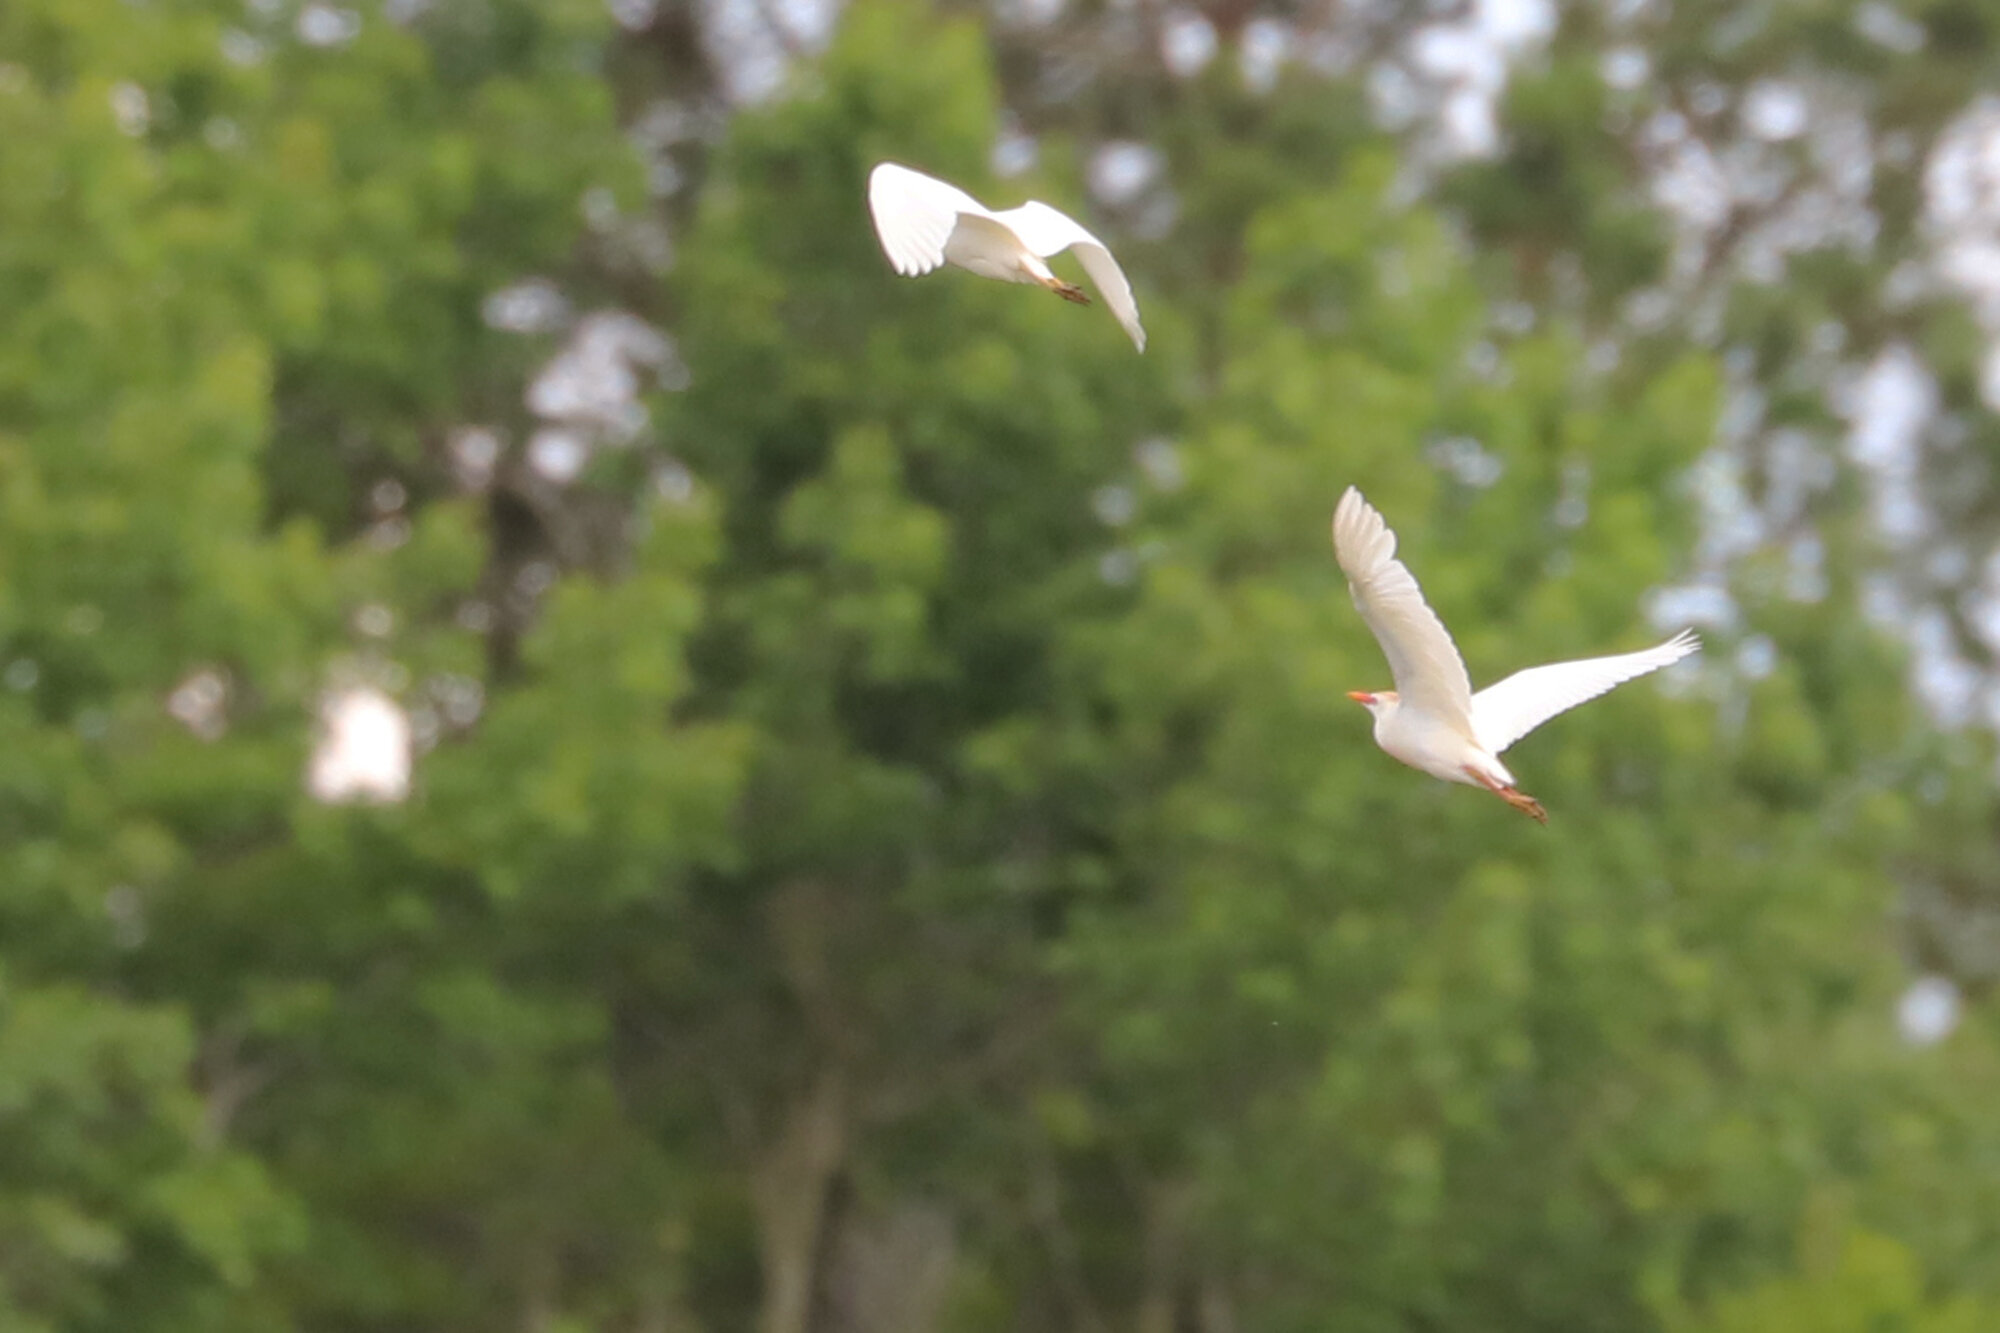  Cattle Egrets / Drum Point Road / 18 Jun 